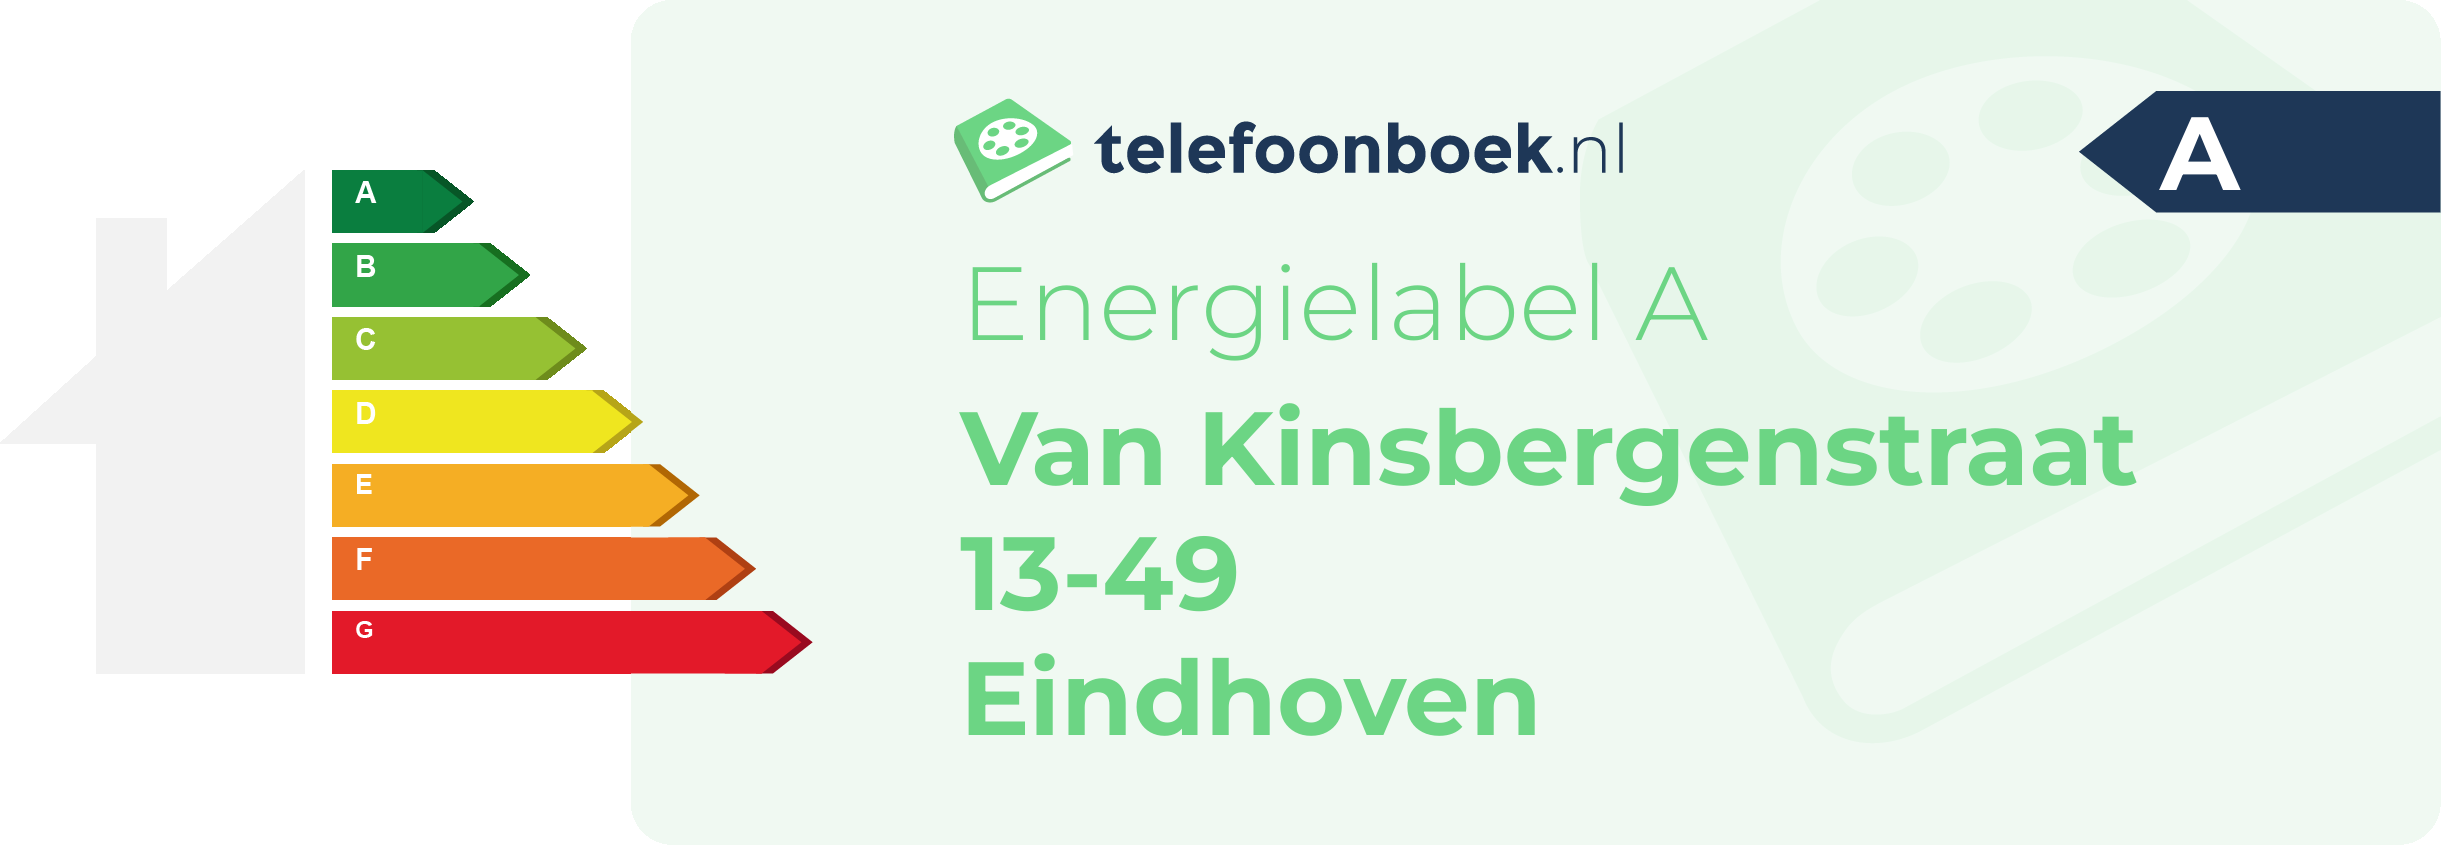 Energielabel Van Kinsbergenstraat 13-49 Eindhoven